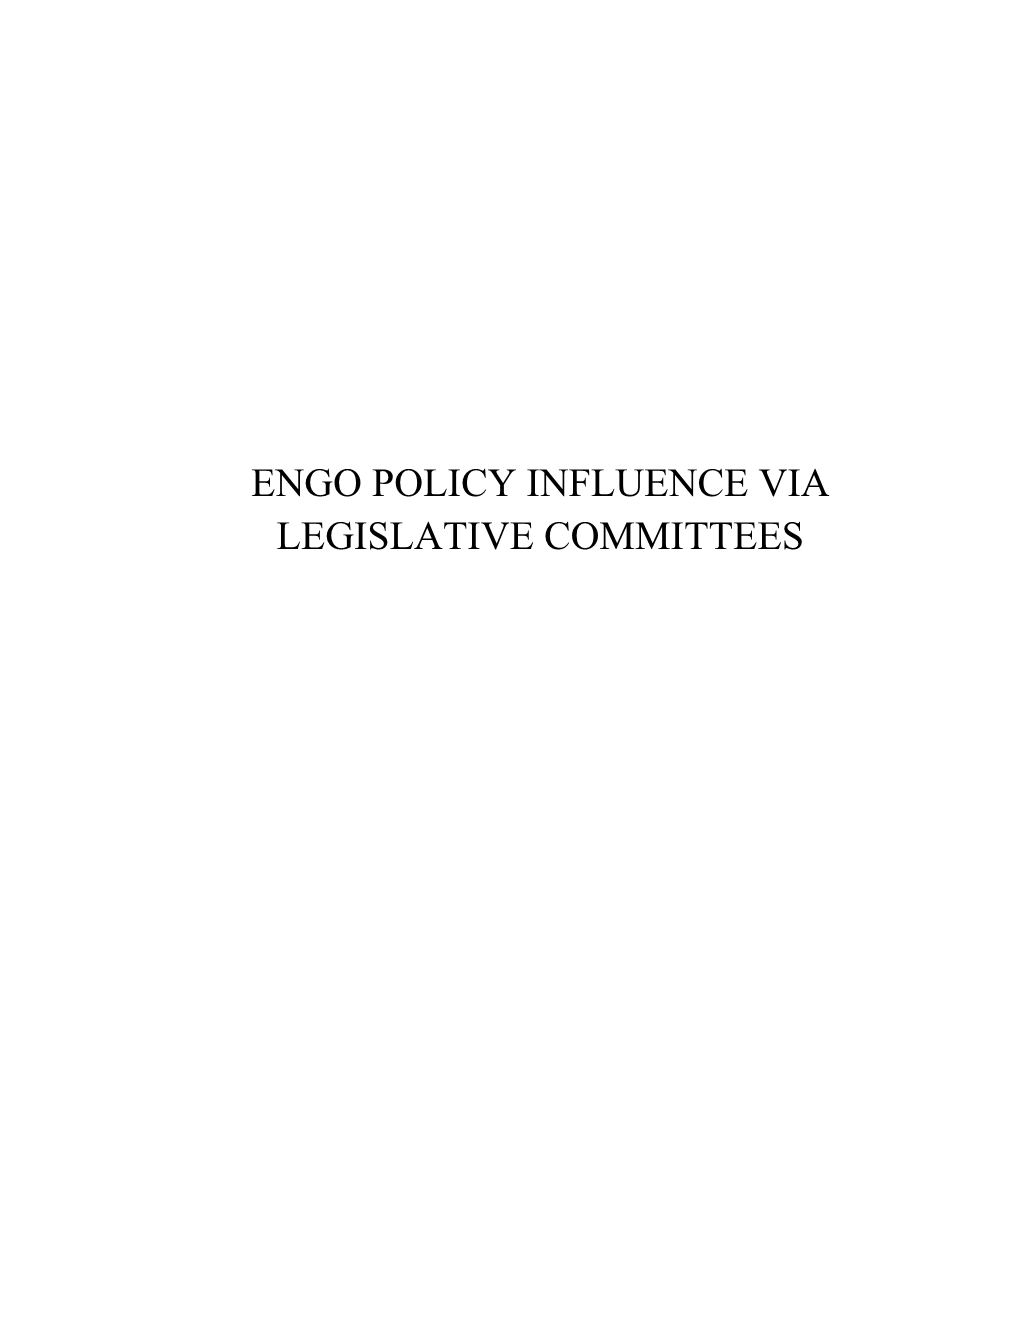 Engo Policy Influence Via Legislative Committees